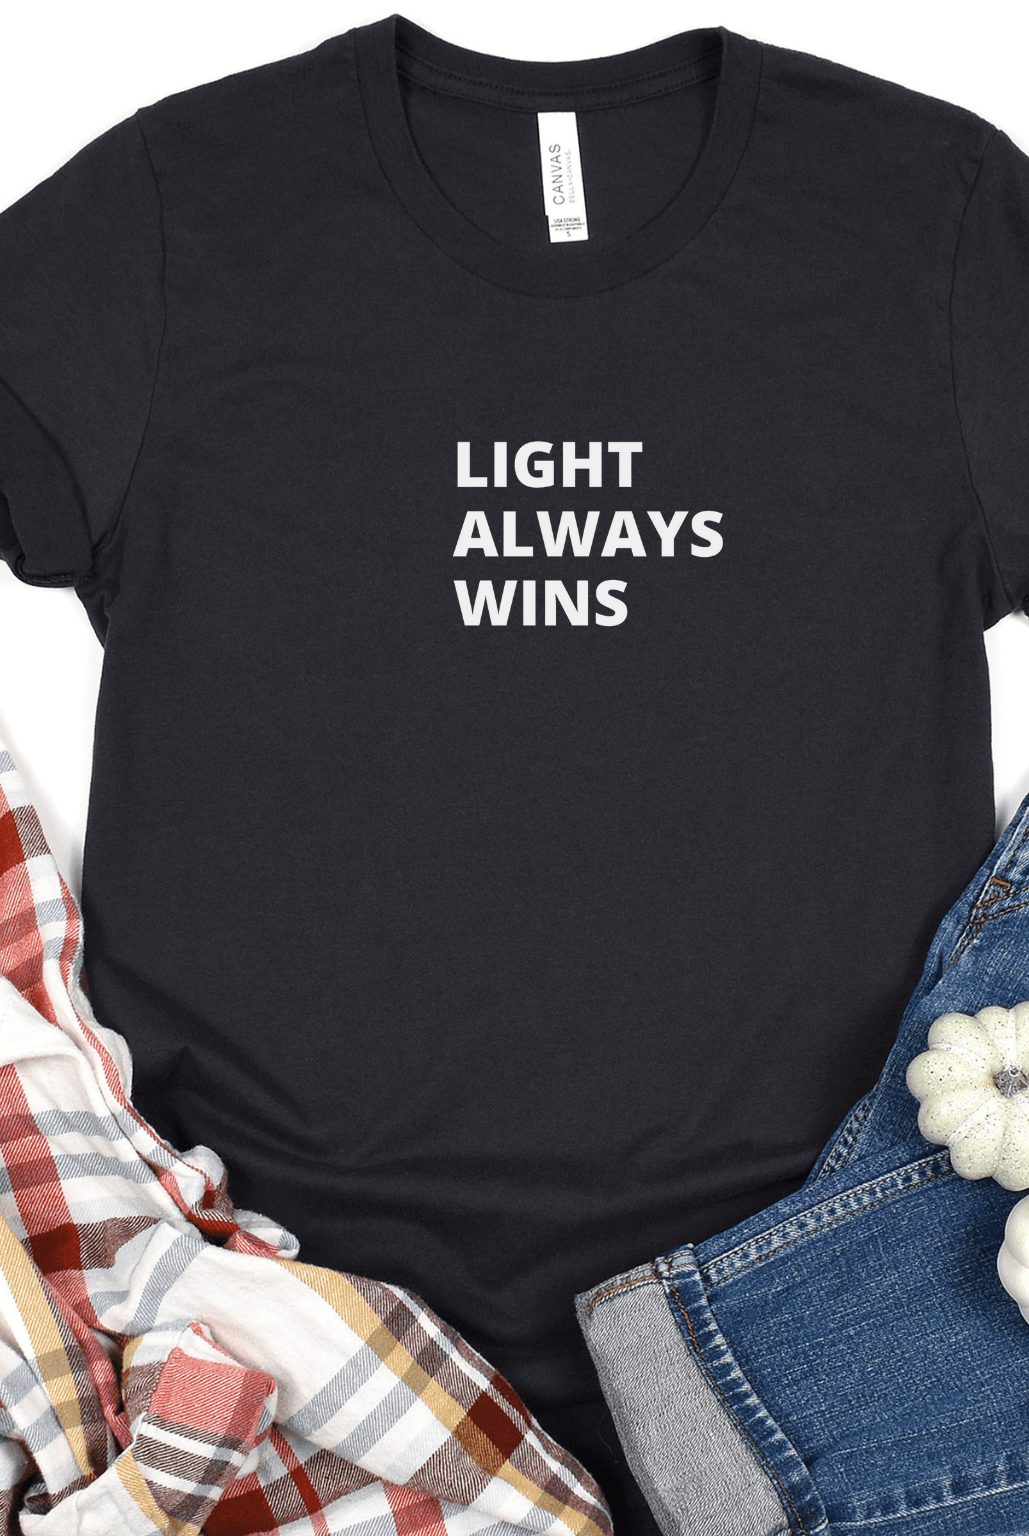 Light always wins - Soulshinecreators - Cotton